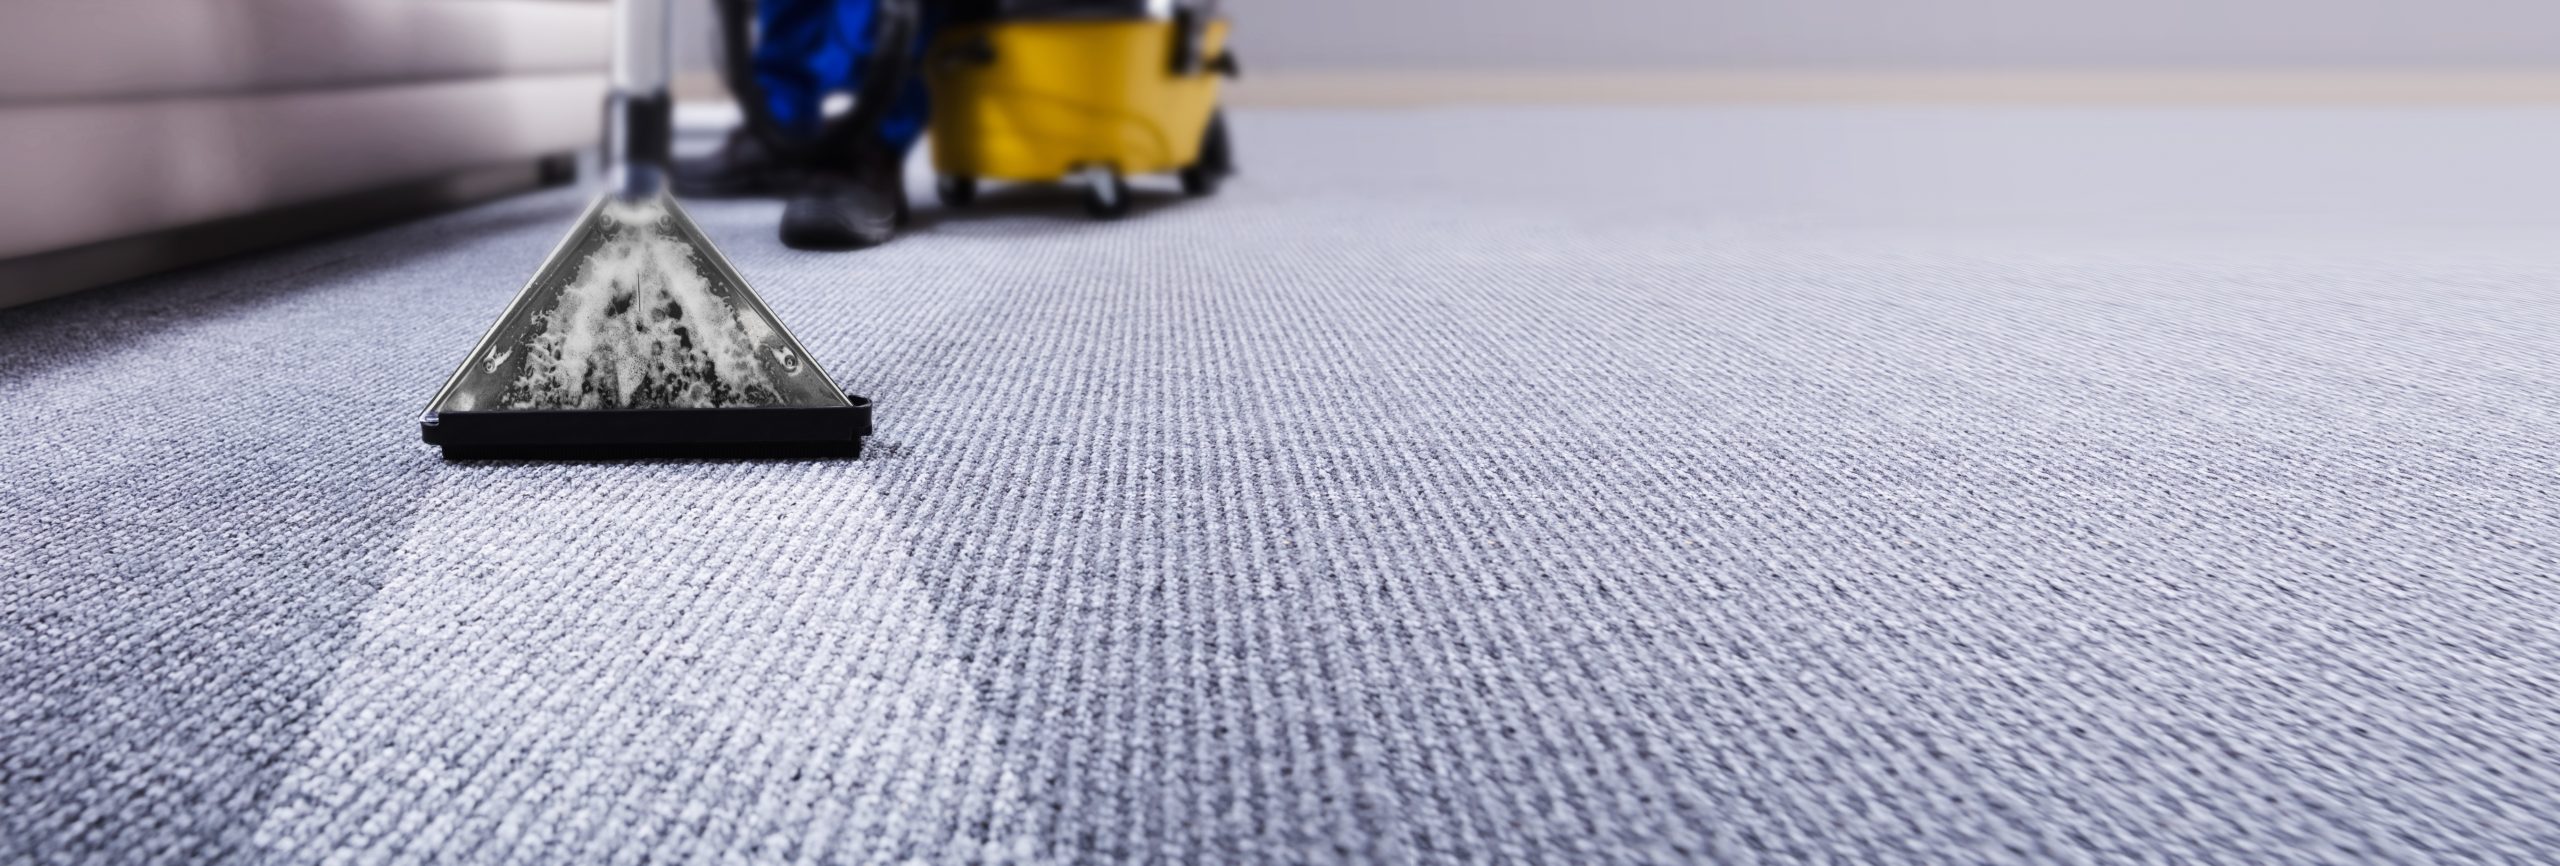 Carpet Cleaning Services Strike Force Maintenance Corporation